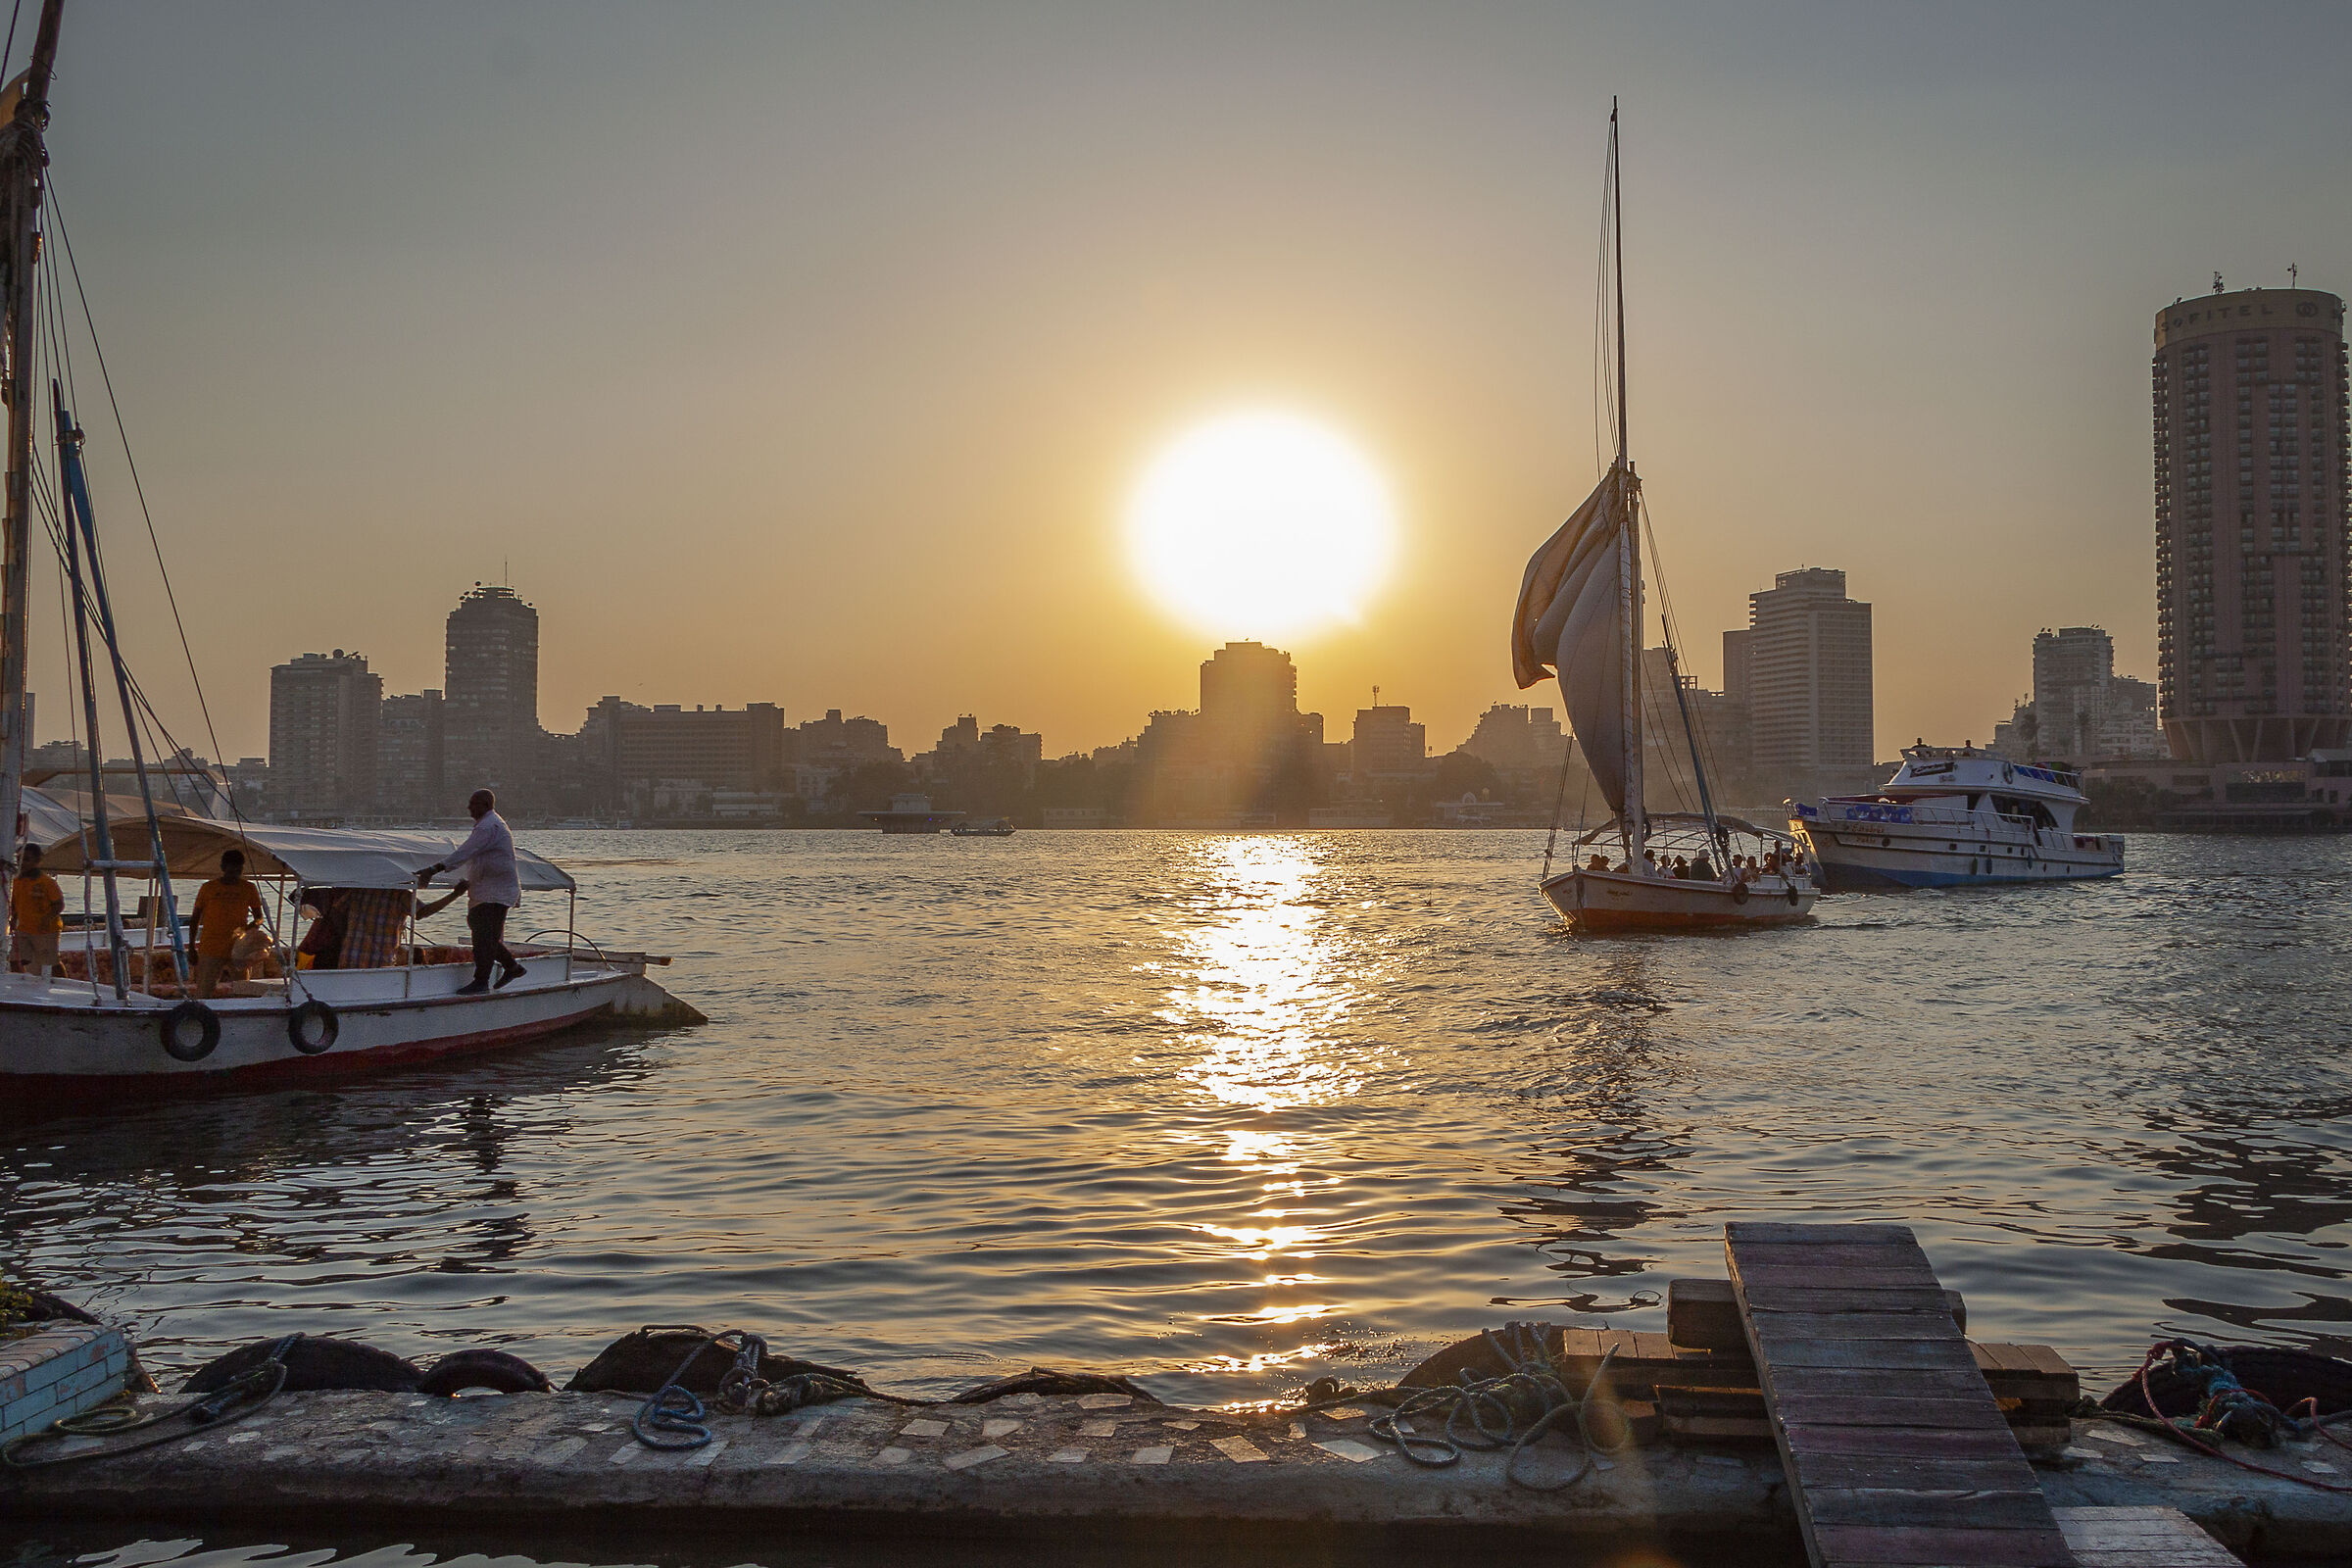 Sunset on the Nile...